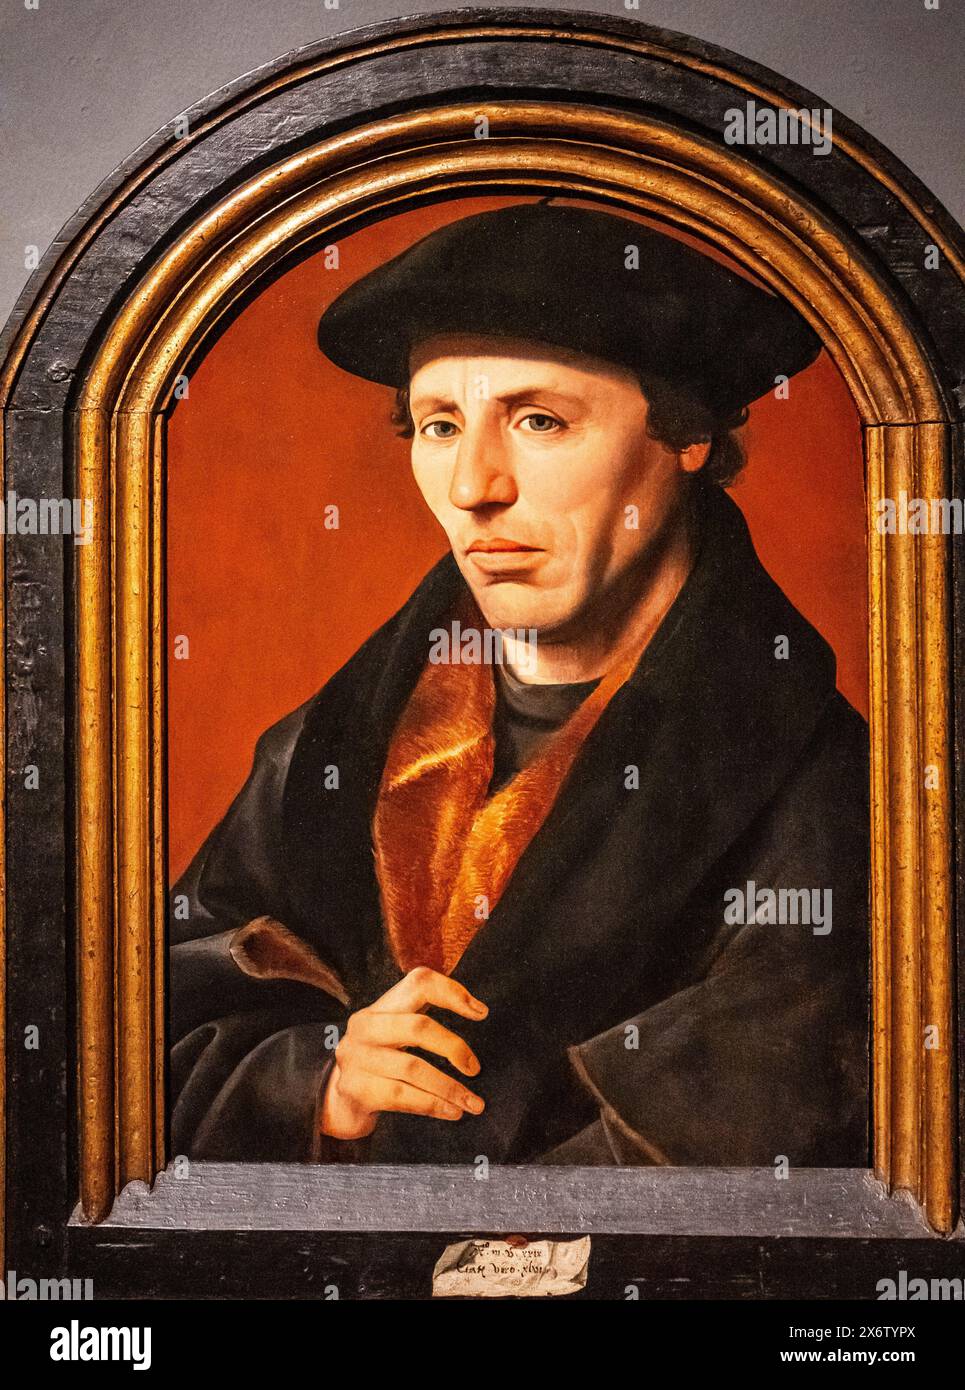 Portrait of a Haarlem Citizen, Jan van Scorel, 1529, oil on panel, Amsterdam, Netherlands. Stock Photo